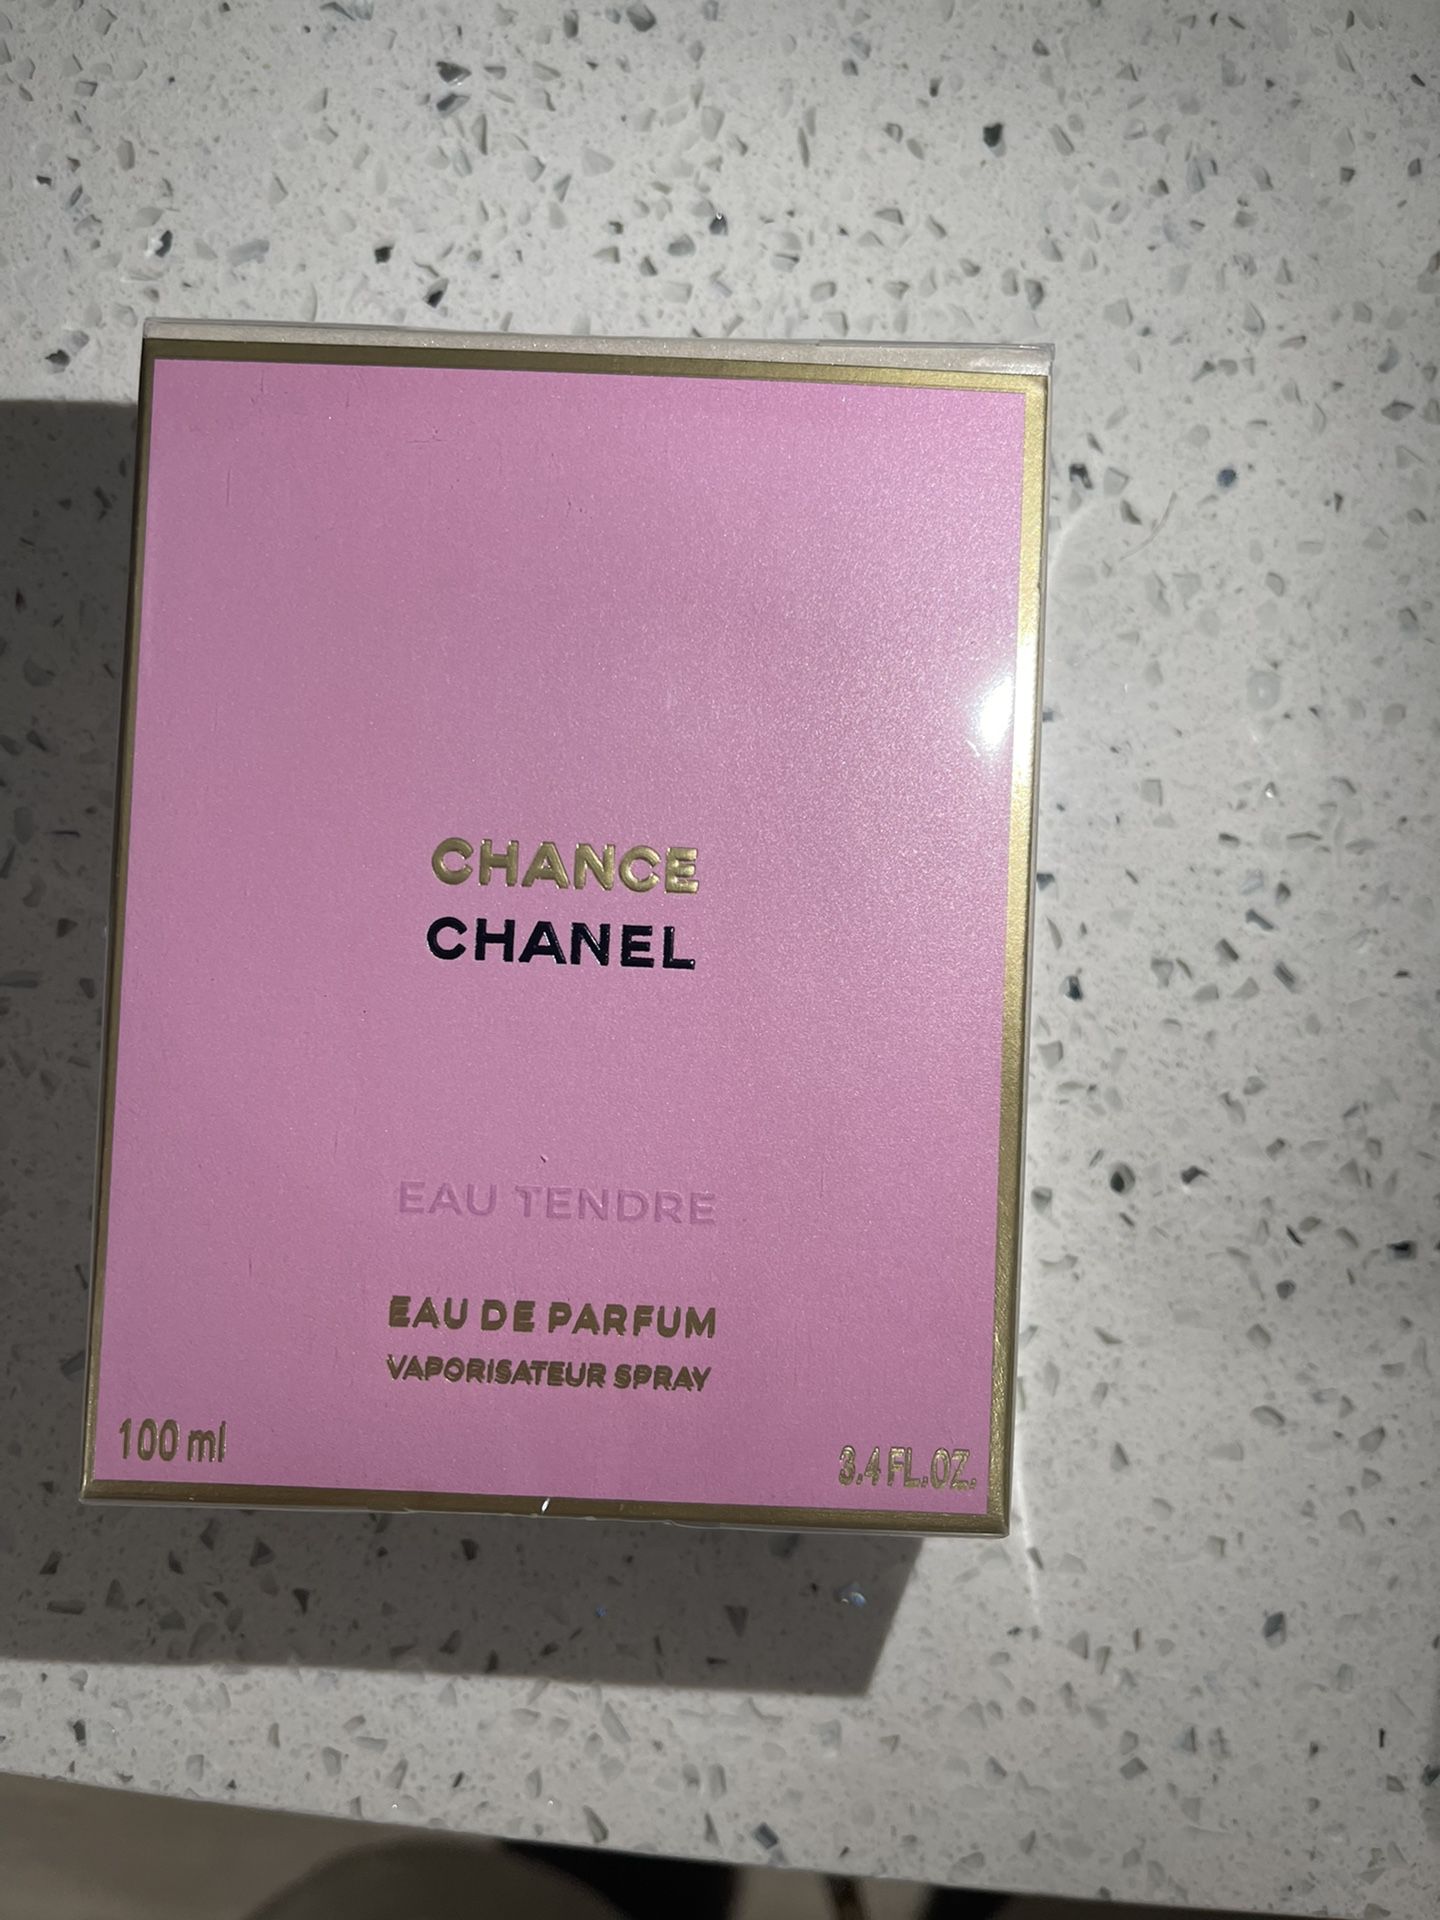 CHANCE Eau de Parfum Spray (EDP) - 3.4 FL. OZ.